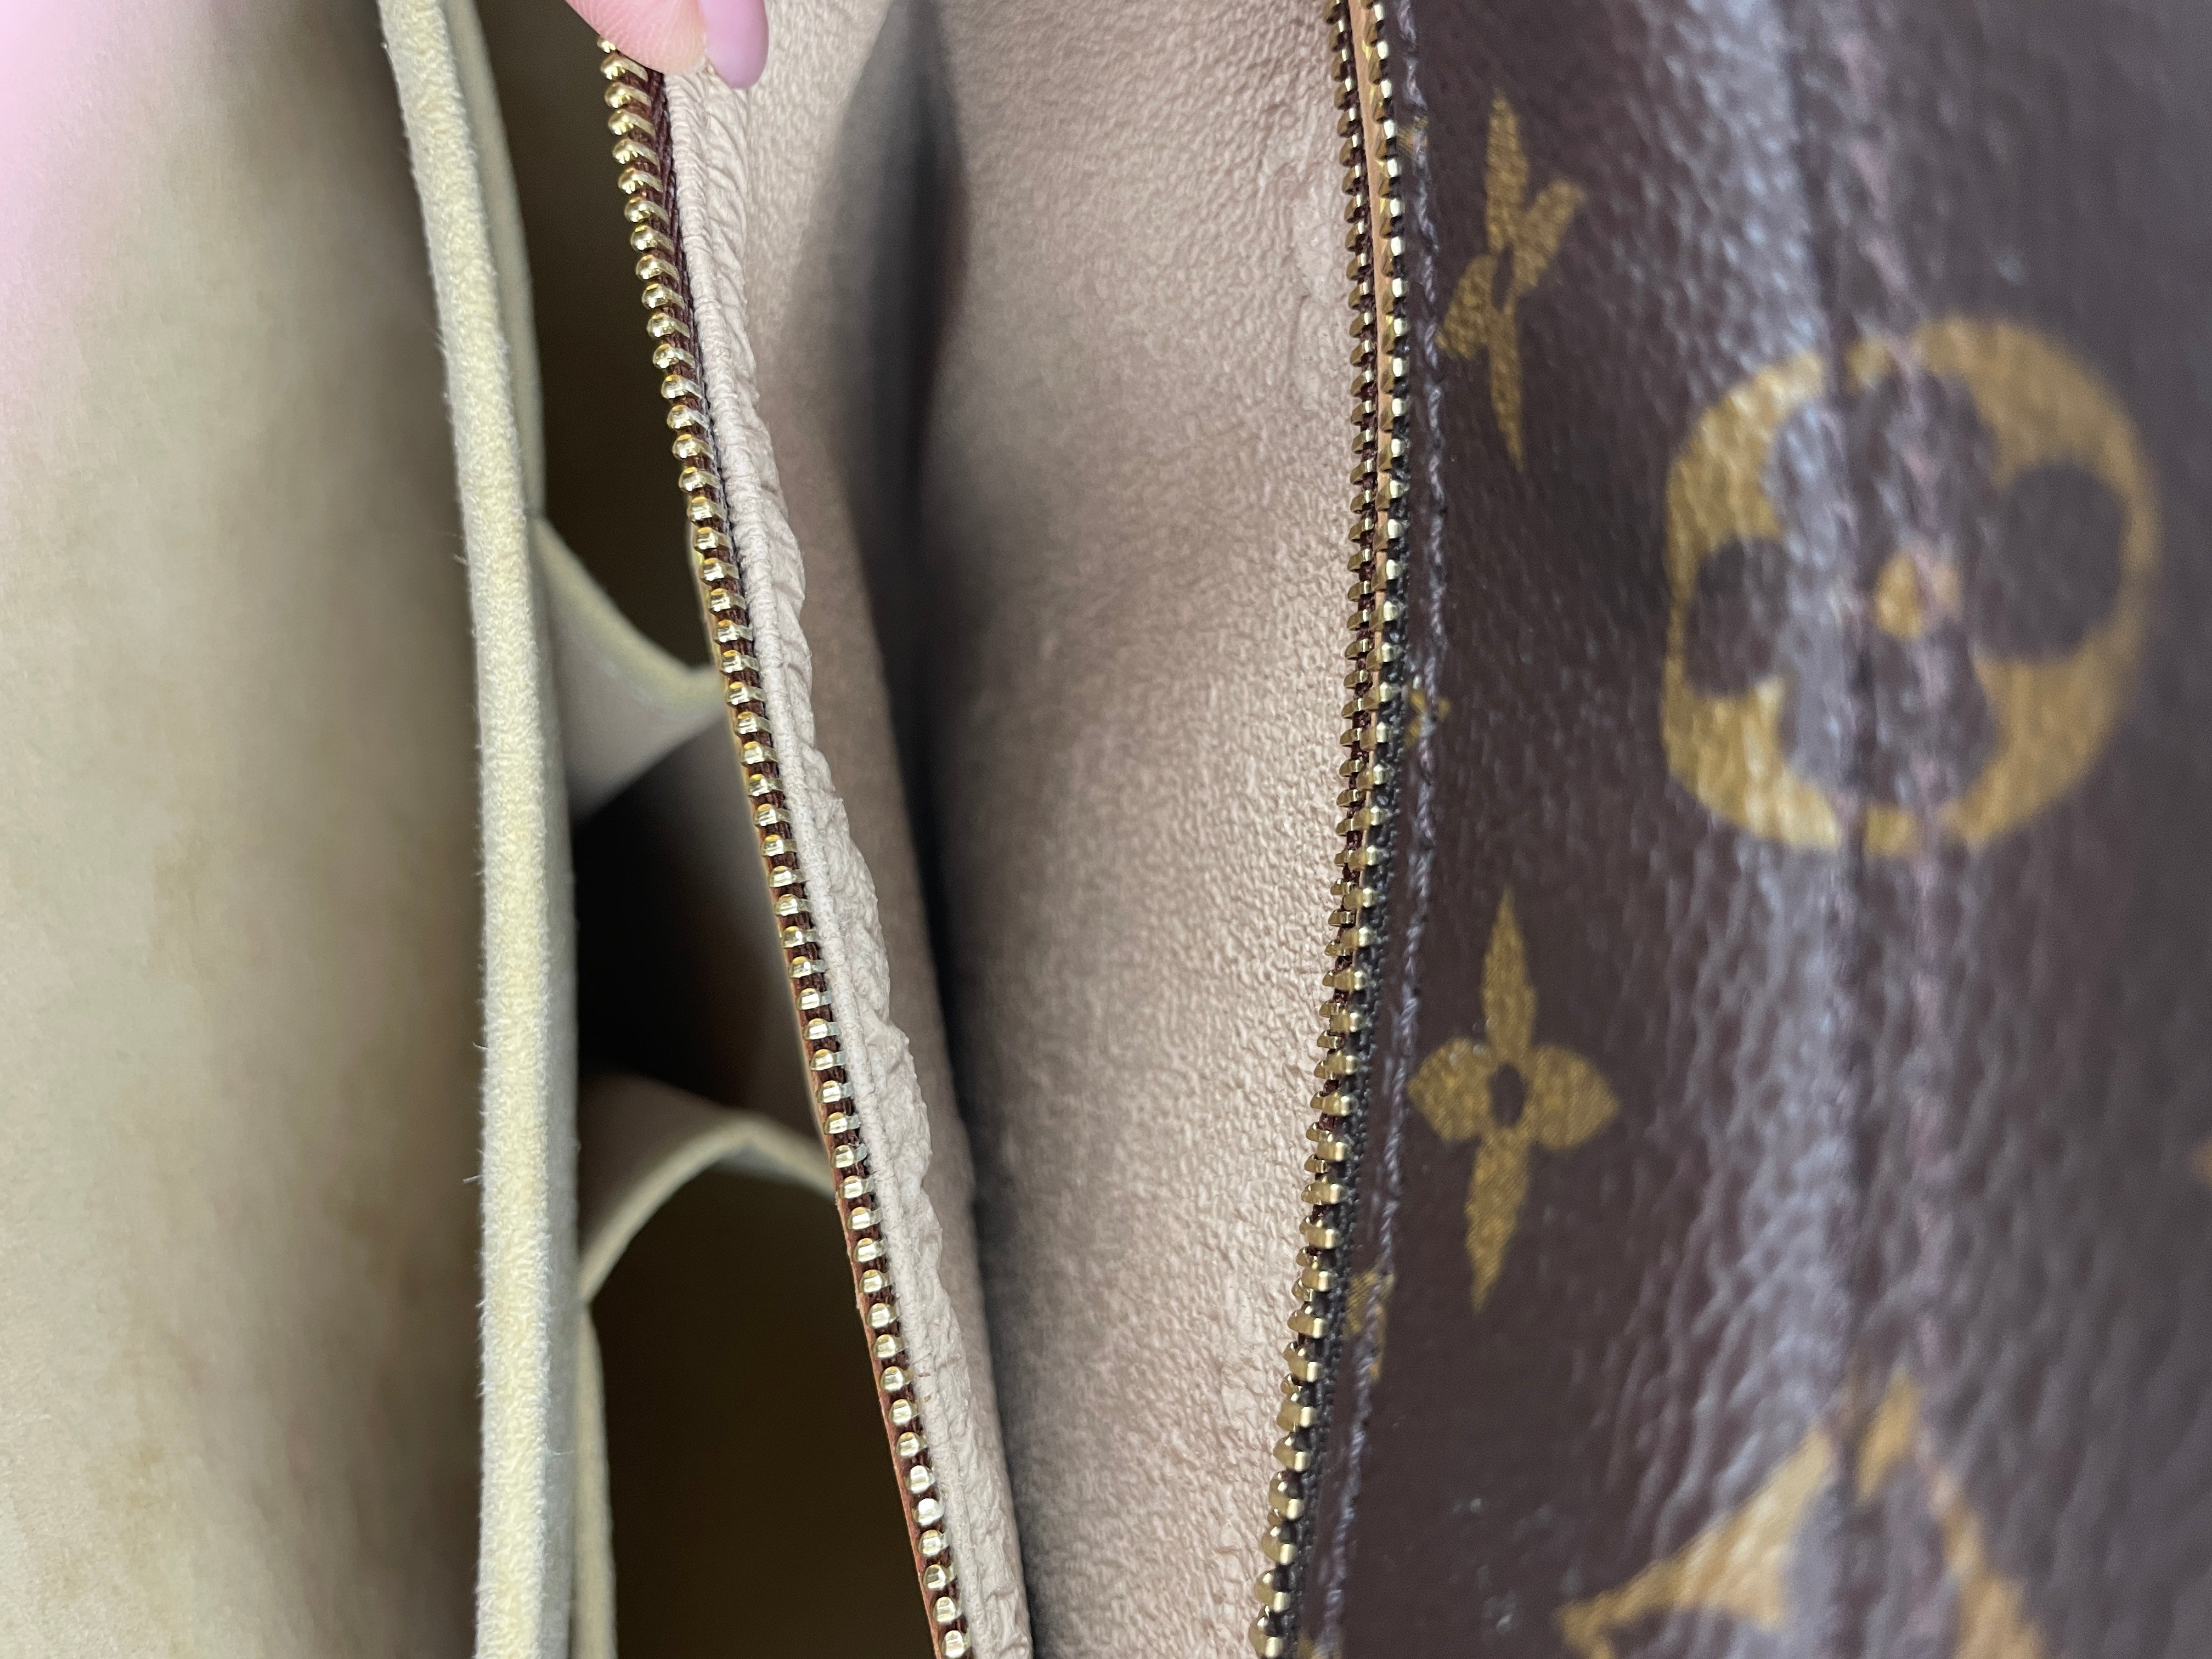 Louis Vuitton Ellipse mm Handbag used (6808)